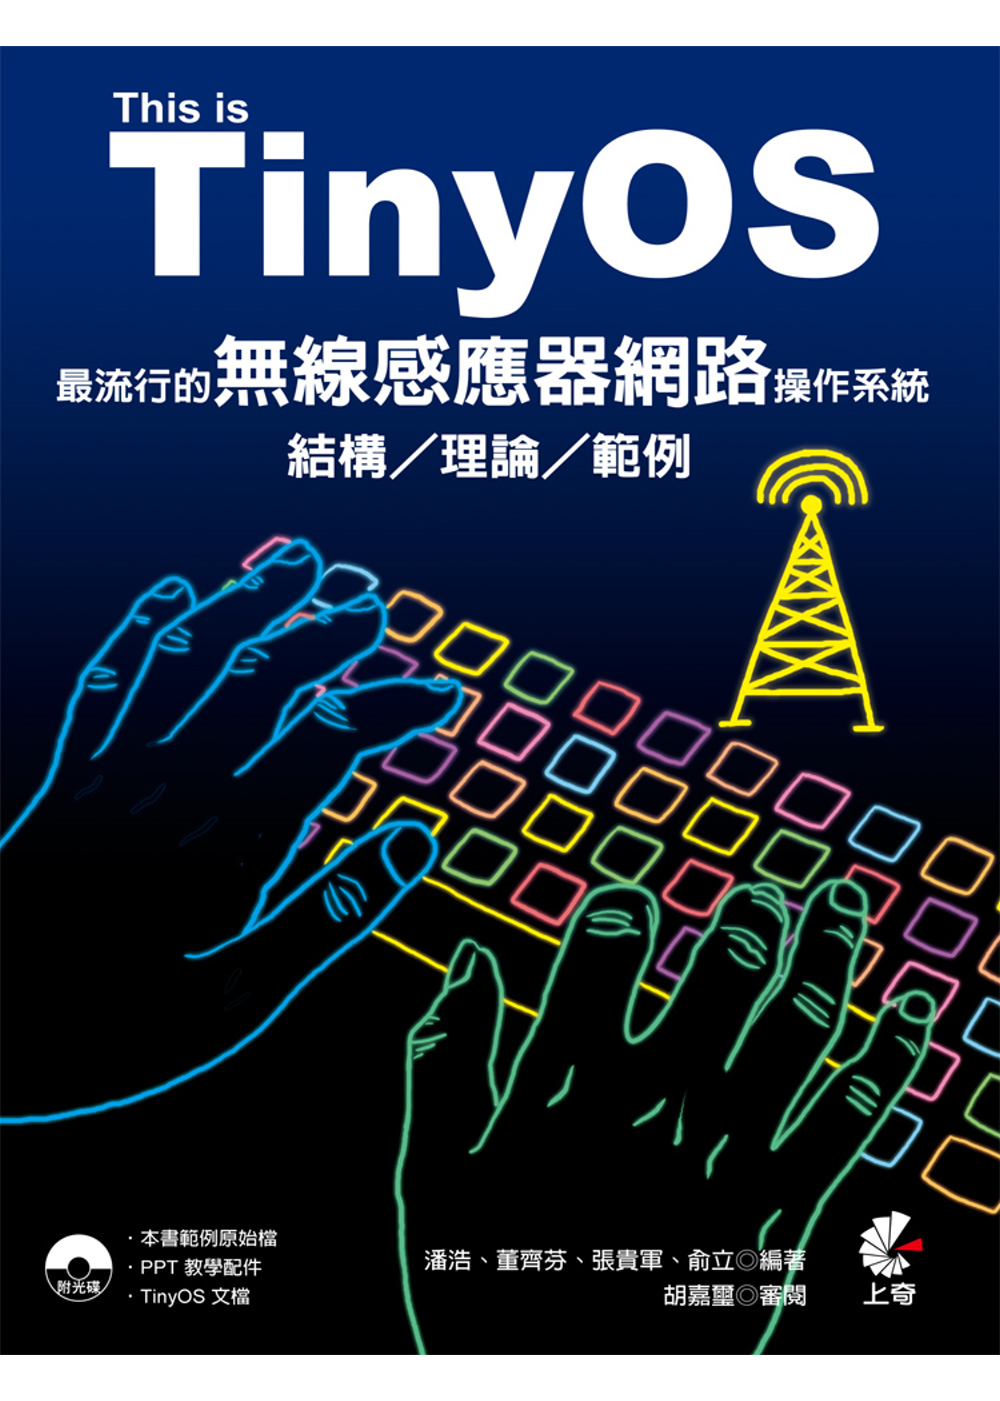 This is TinyOS！最流行的無線感應器網路操作系統...